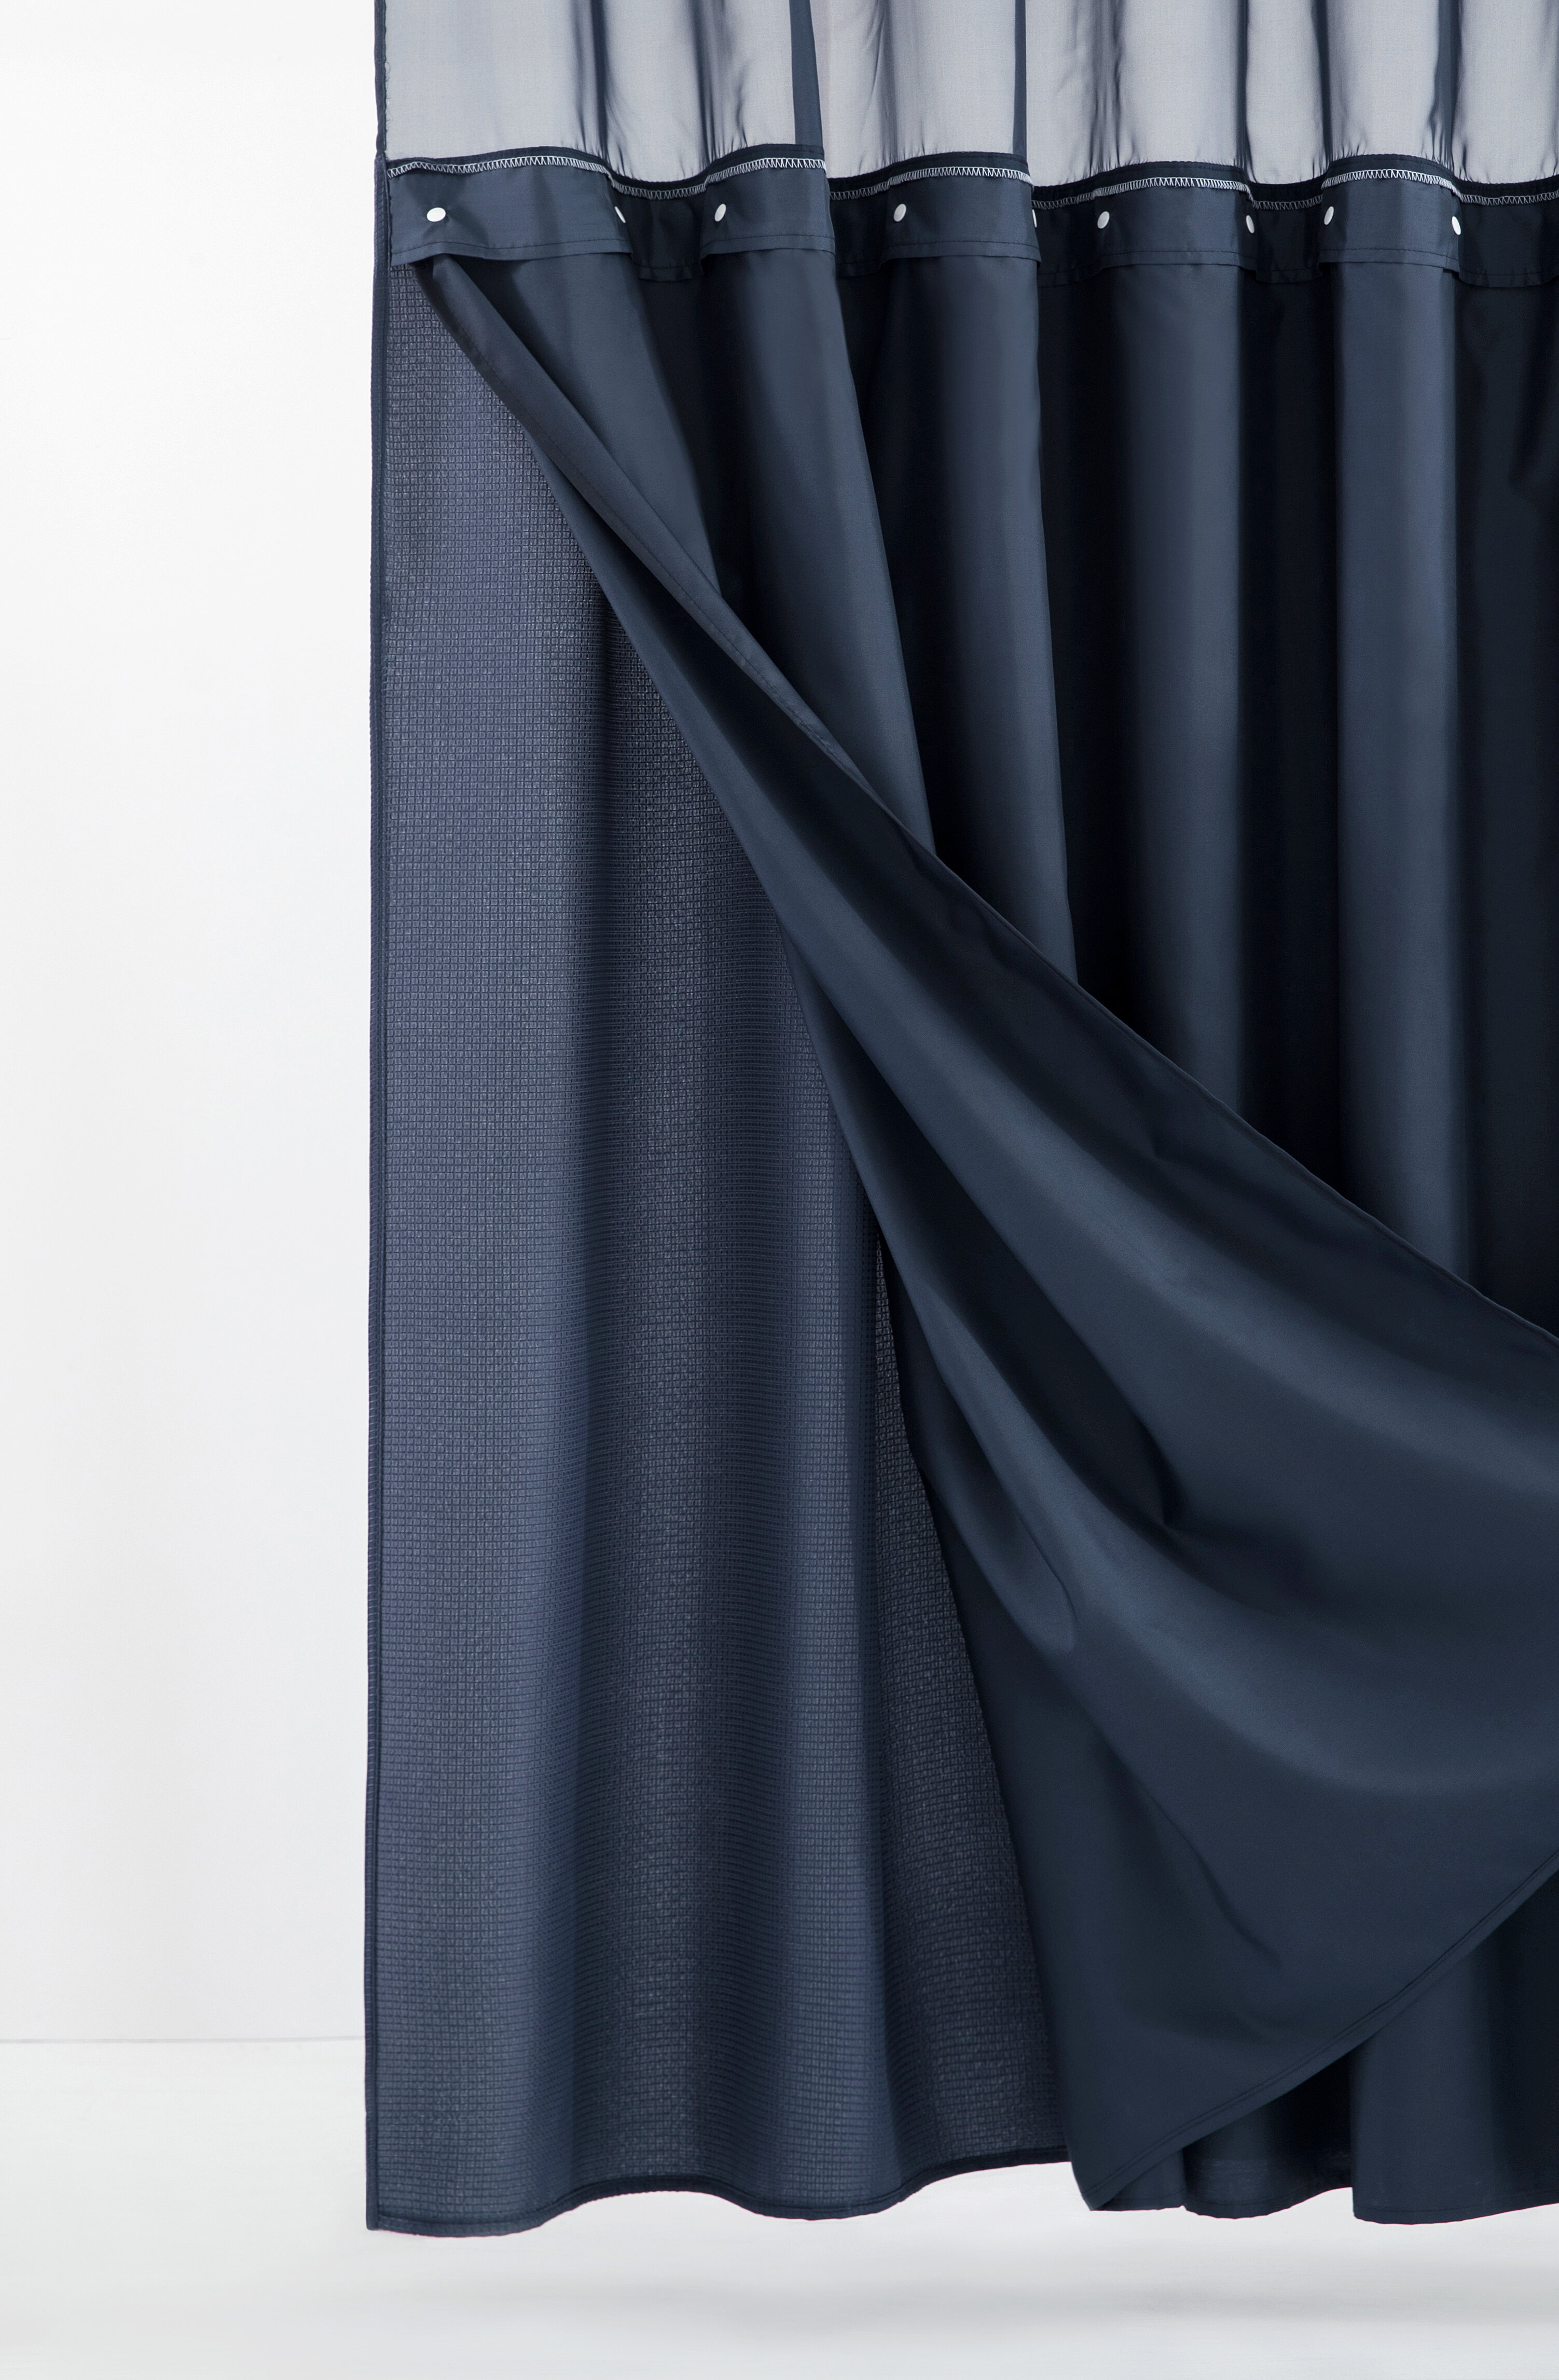 navy blue shower curtain